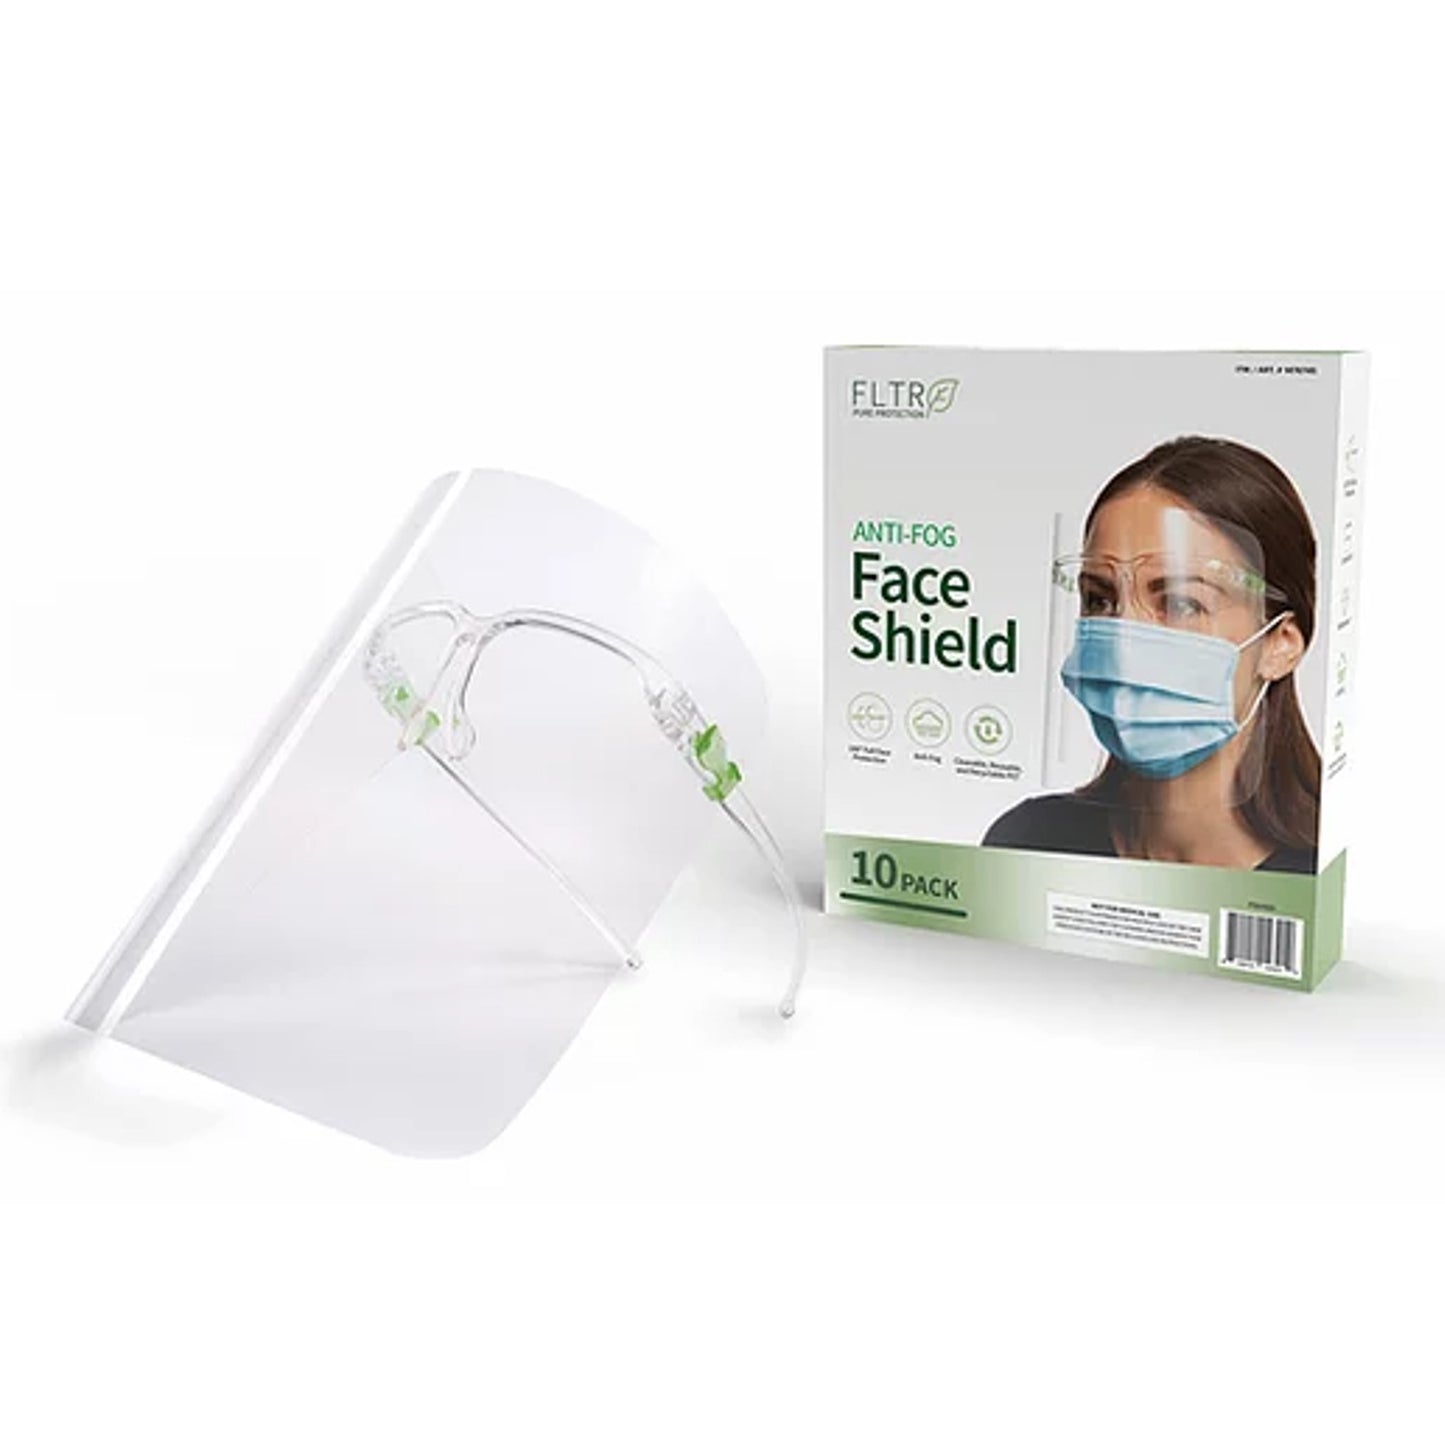 FLTR Face Shield Anti-Fog 180° full face protection lightweight design - 10 Pack